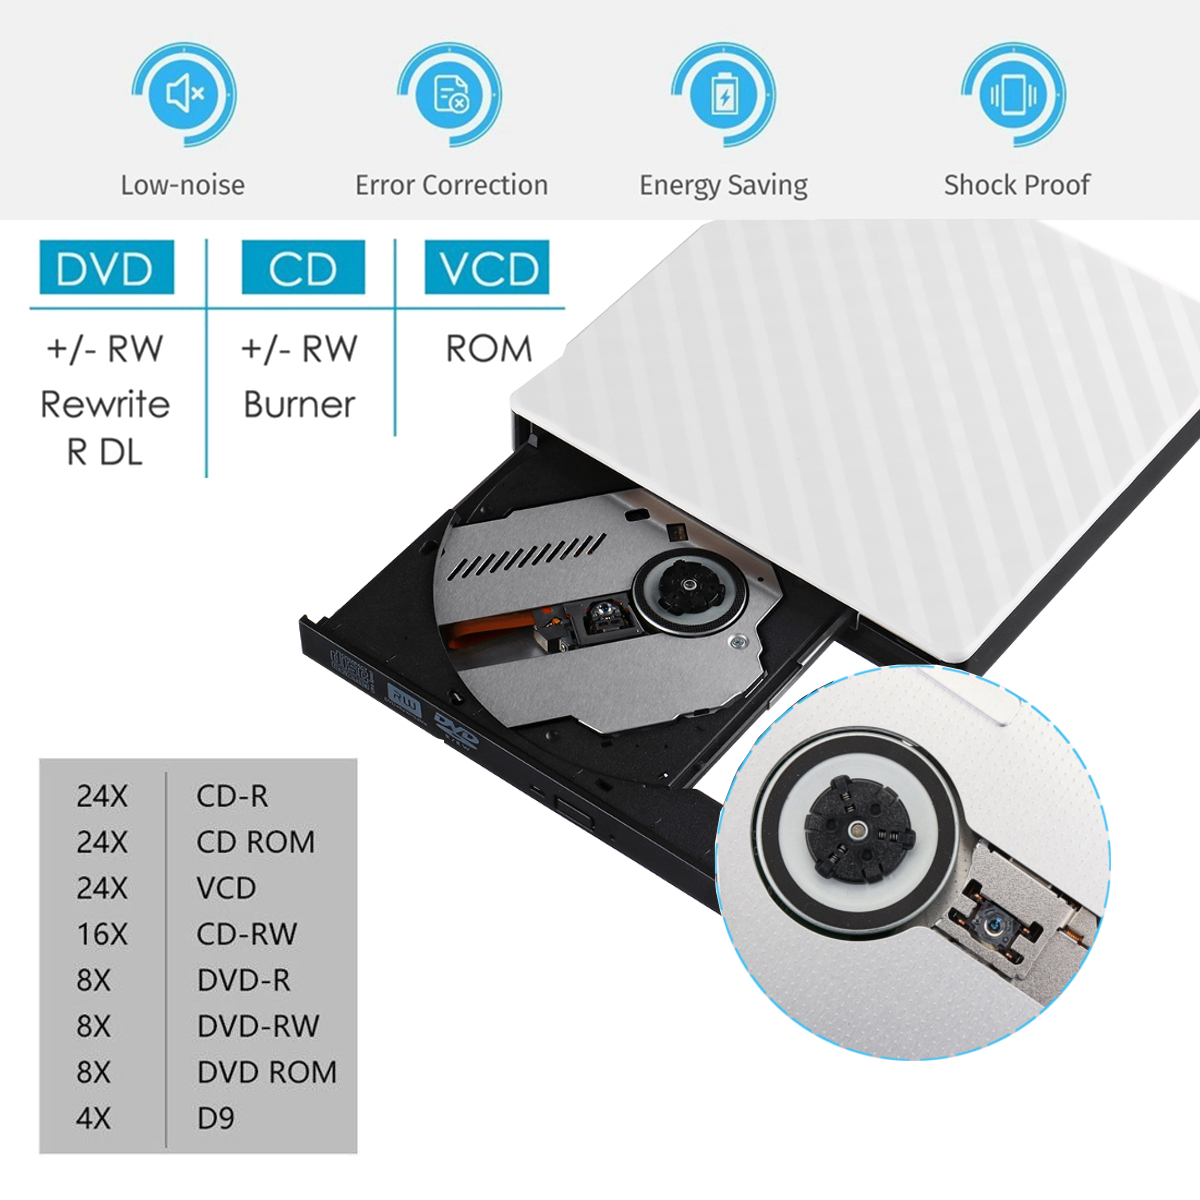 External USB 3.0 DVD RW CD Writer Slim Carbon Grain Drive Burner Reader Player For PC Laptop Optical Drive